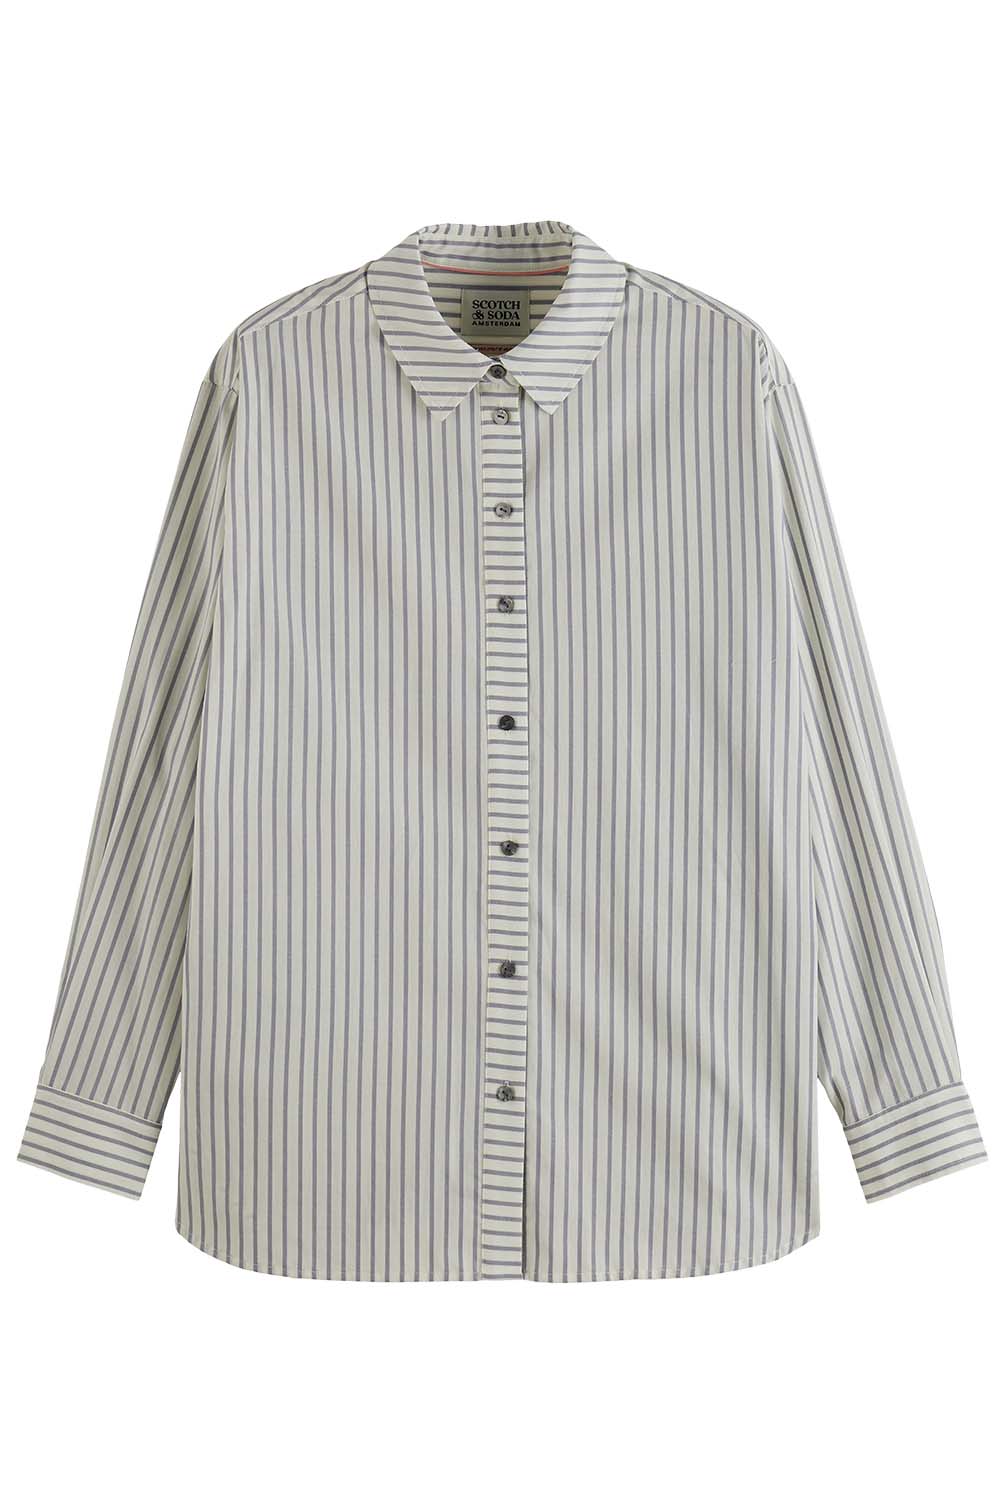 Scotch & Soda - Striped Oversized Shirt - Dusty Blue Rope Stripe - Front